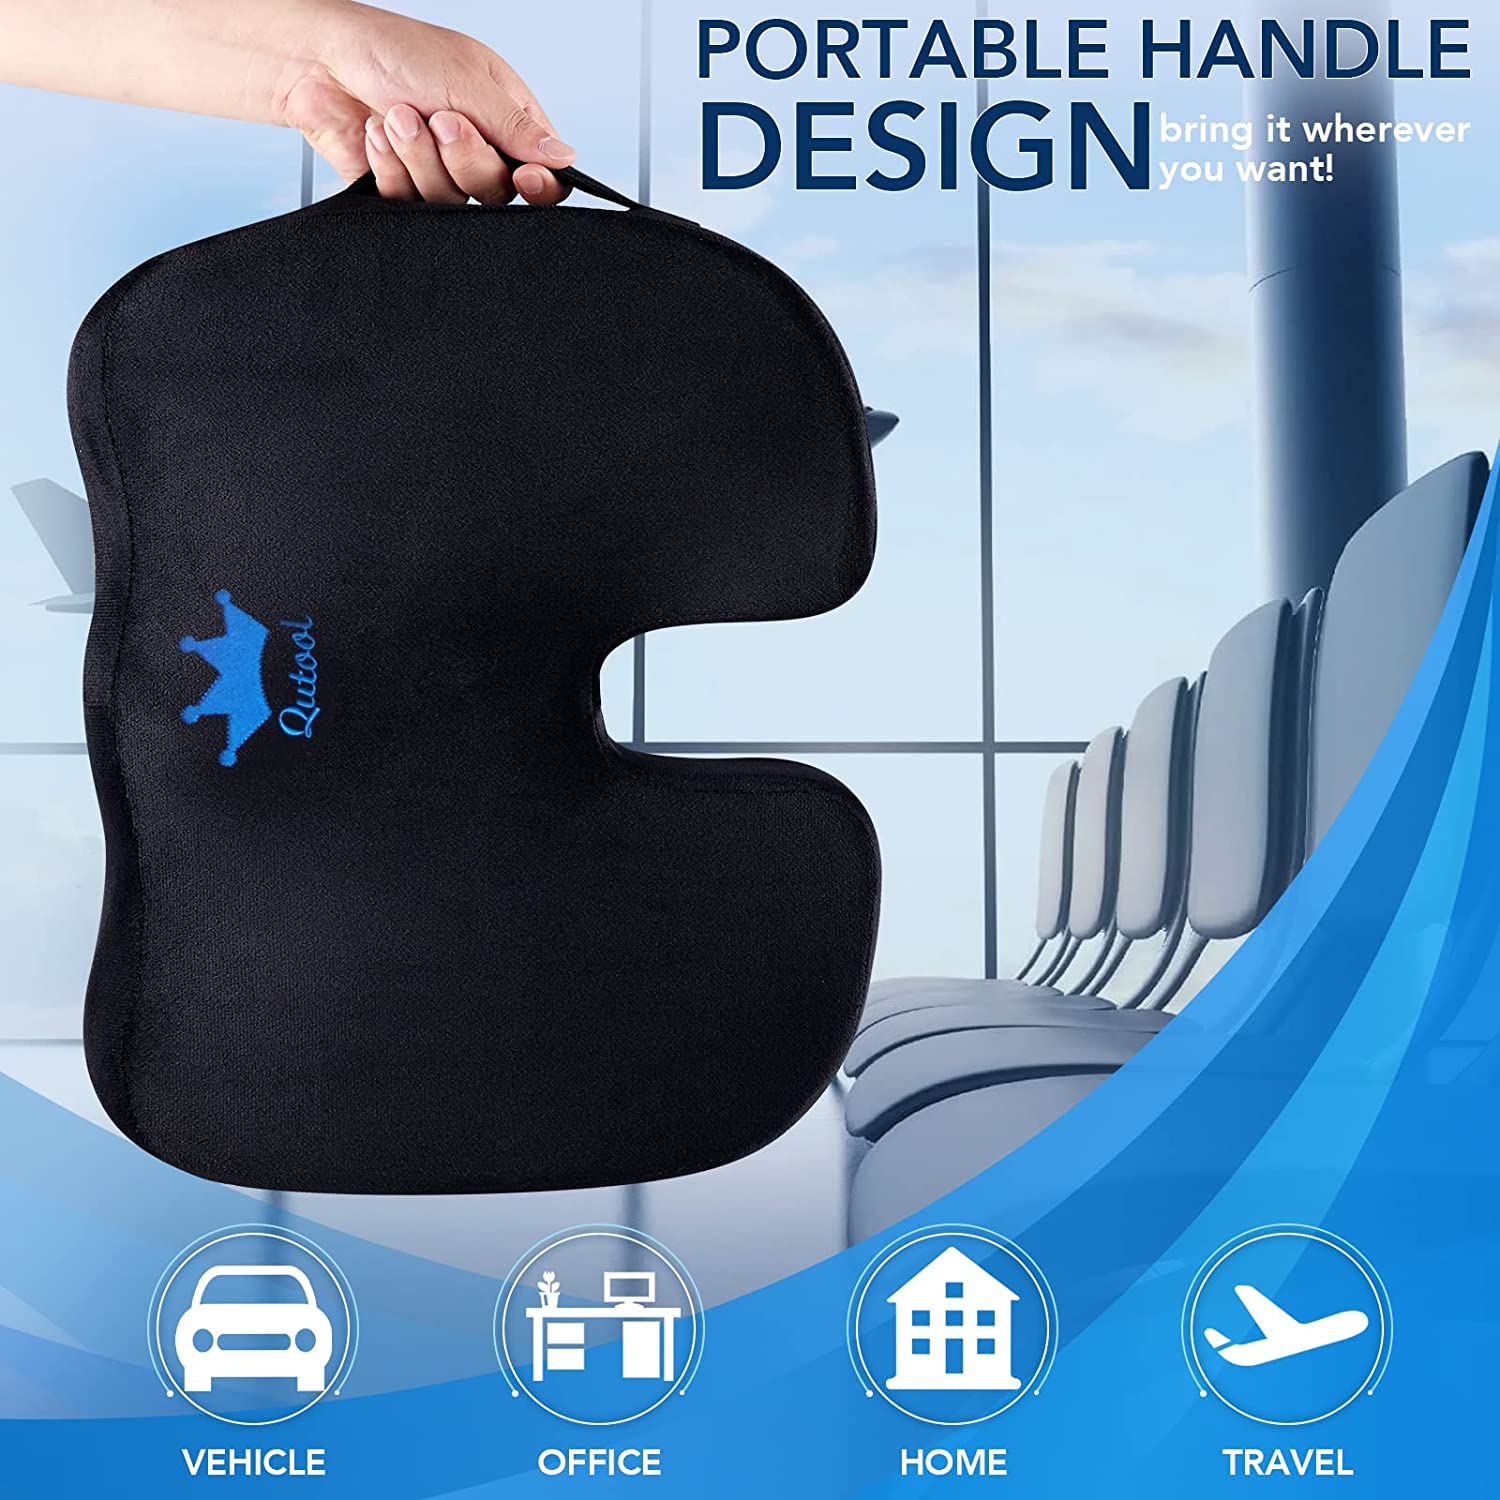 Qutool Orthopedic Seat Cushion & Lumbar Support Pillow